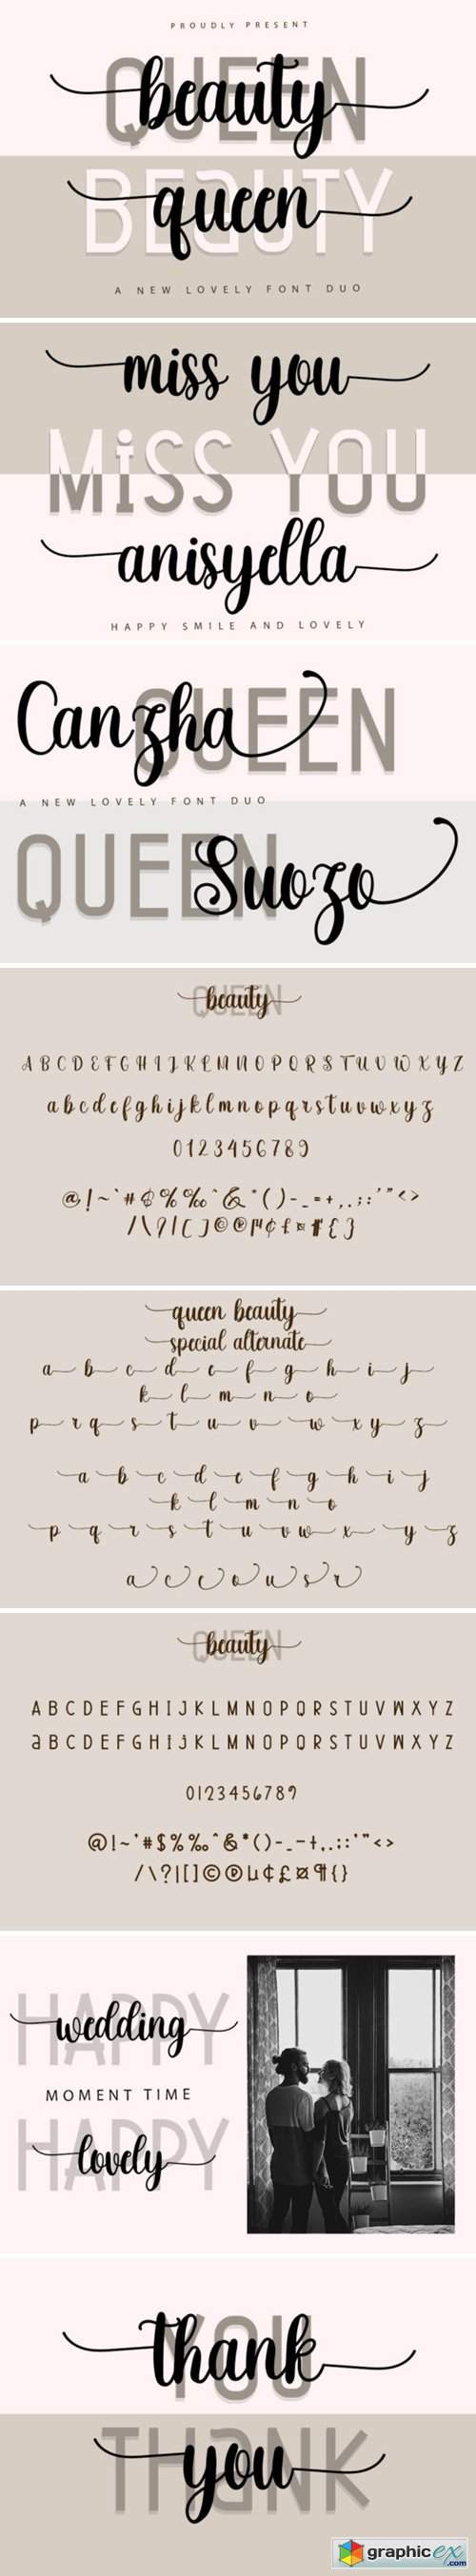  Queen Beauty Font 